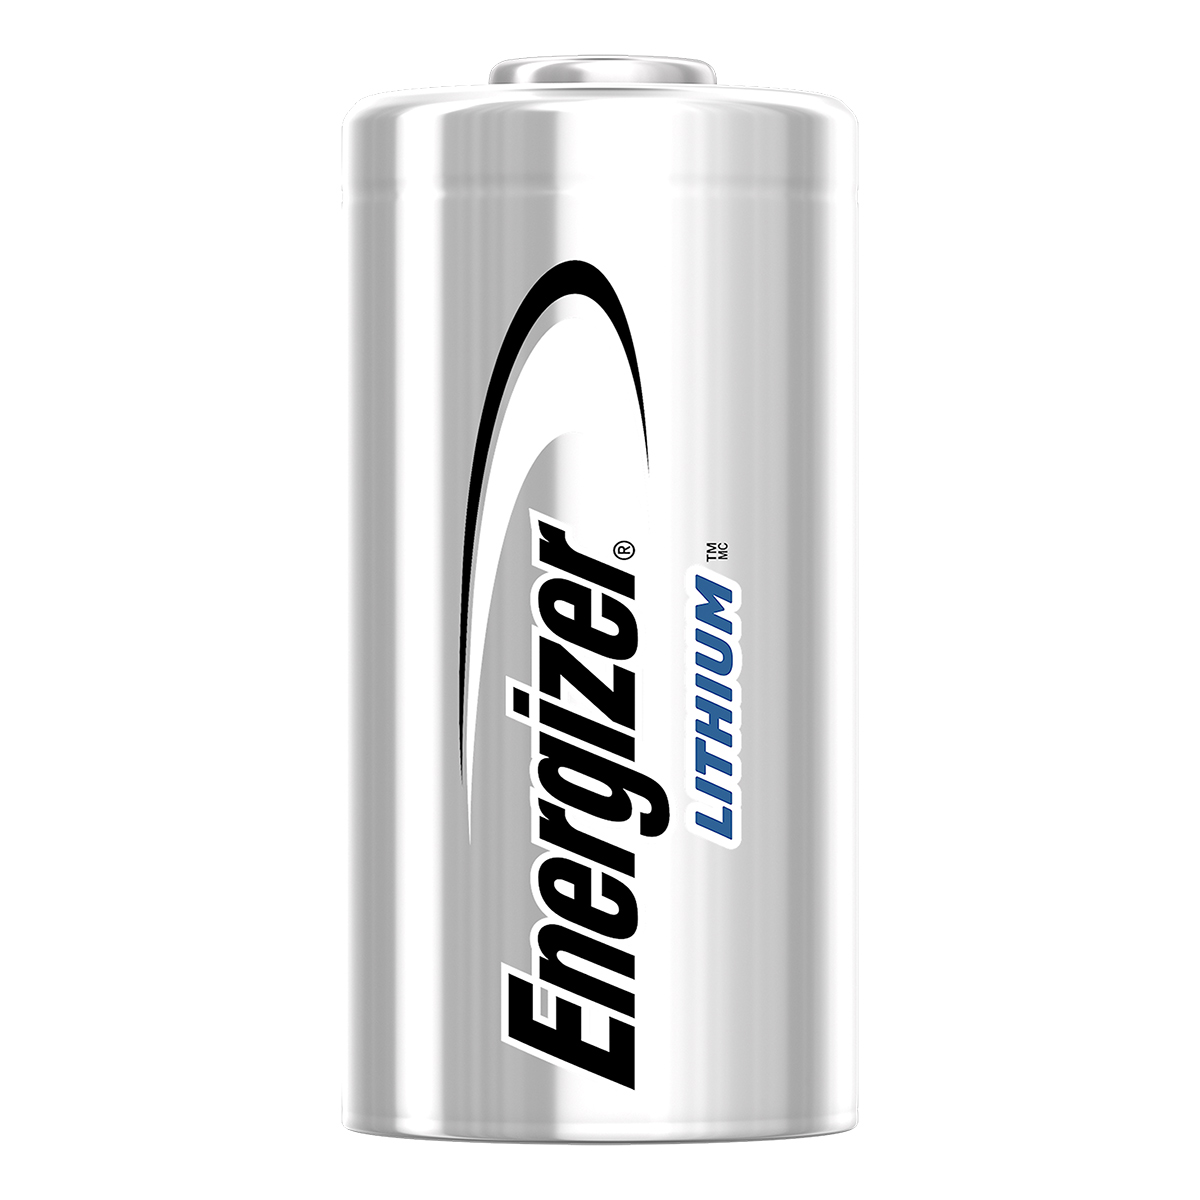 Energizer Lithium Fotobatterien 123